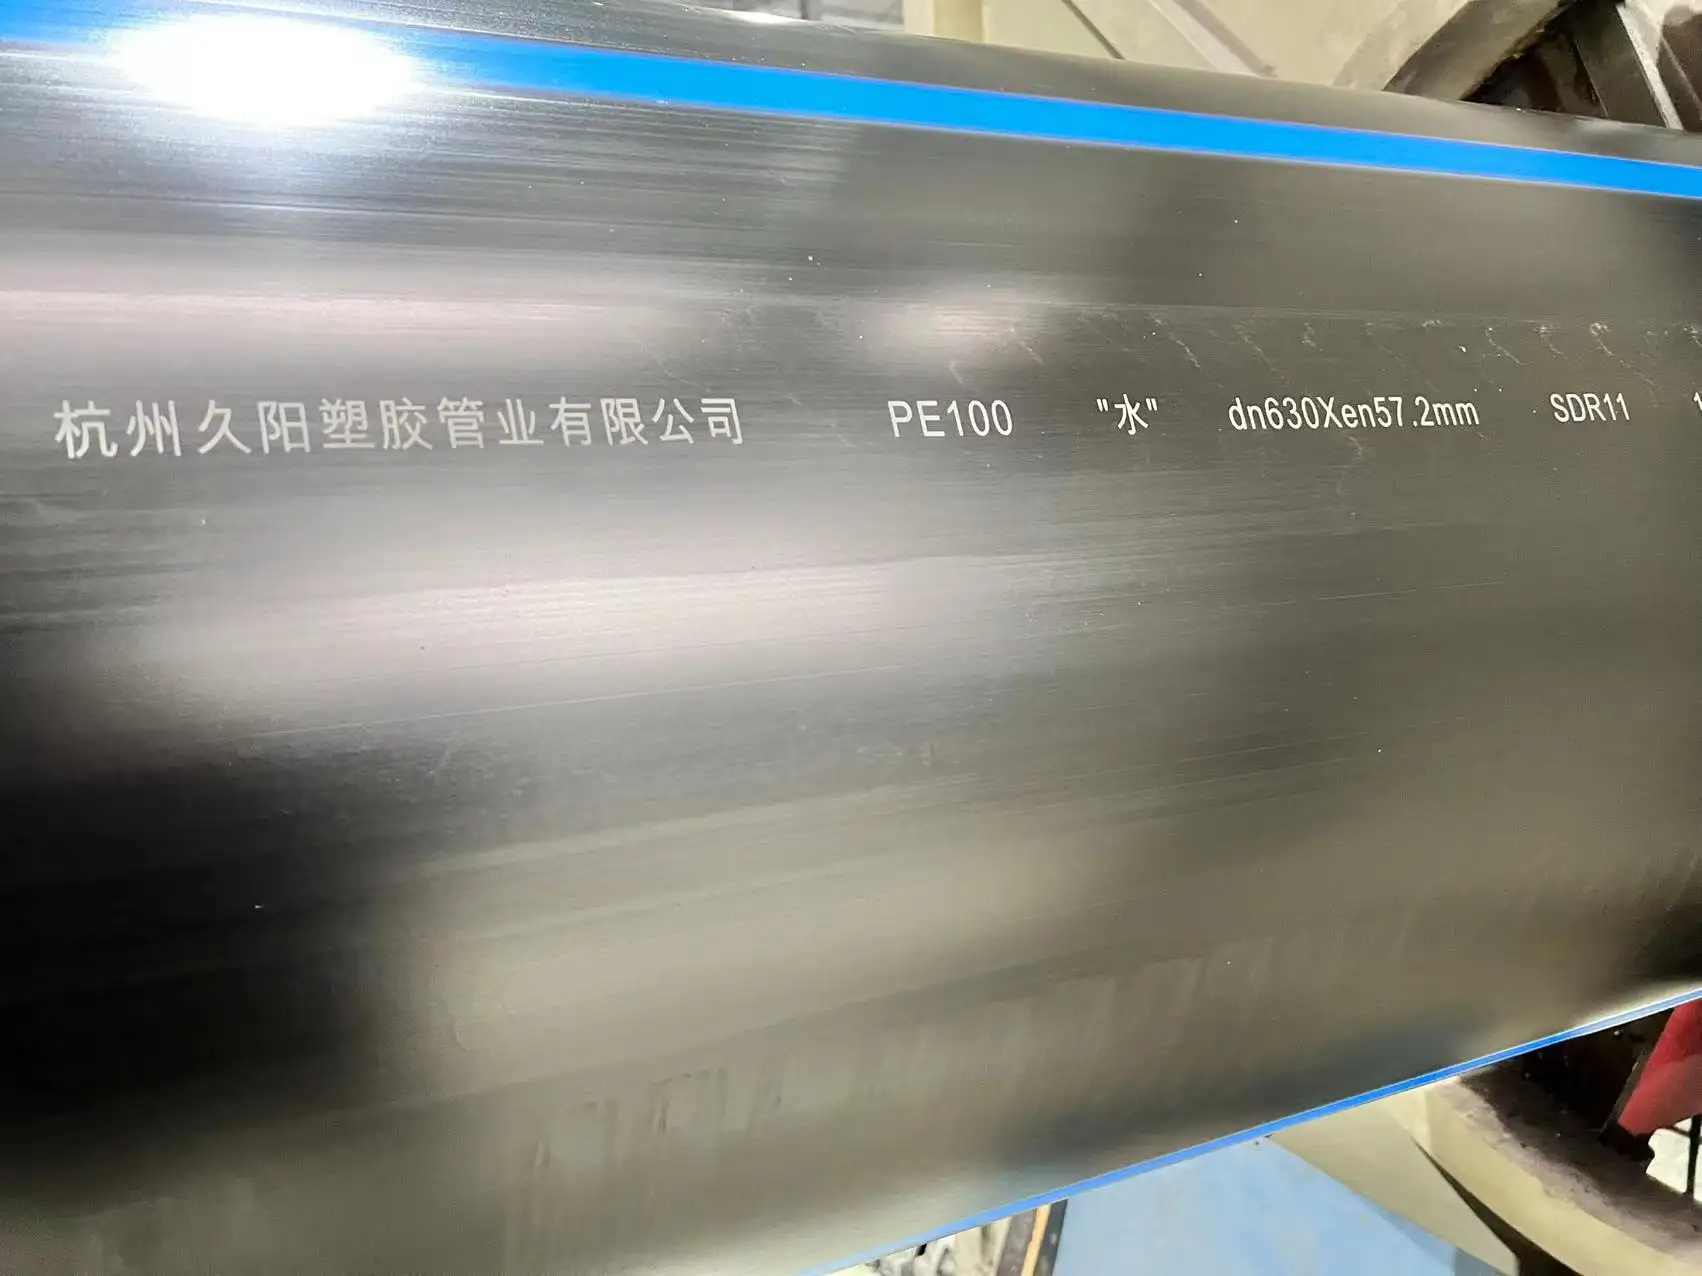 JY HDPE tubos de plástico negro China pe100 110mm tubería de HDPE de mm para el suministro de agua